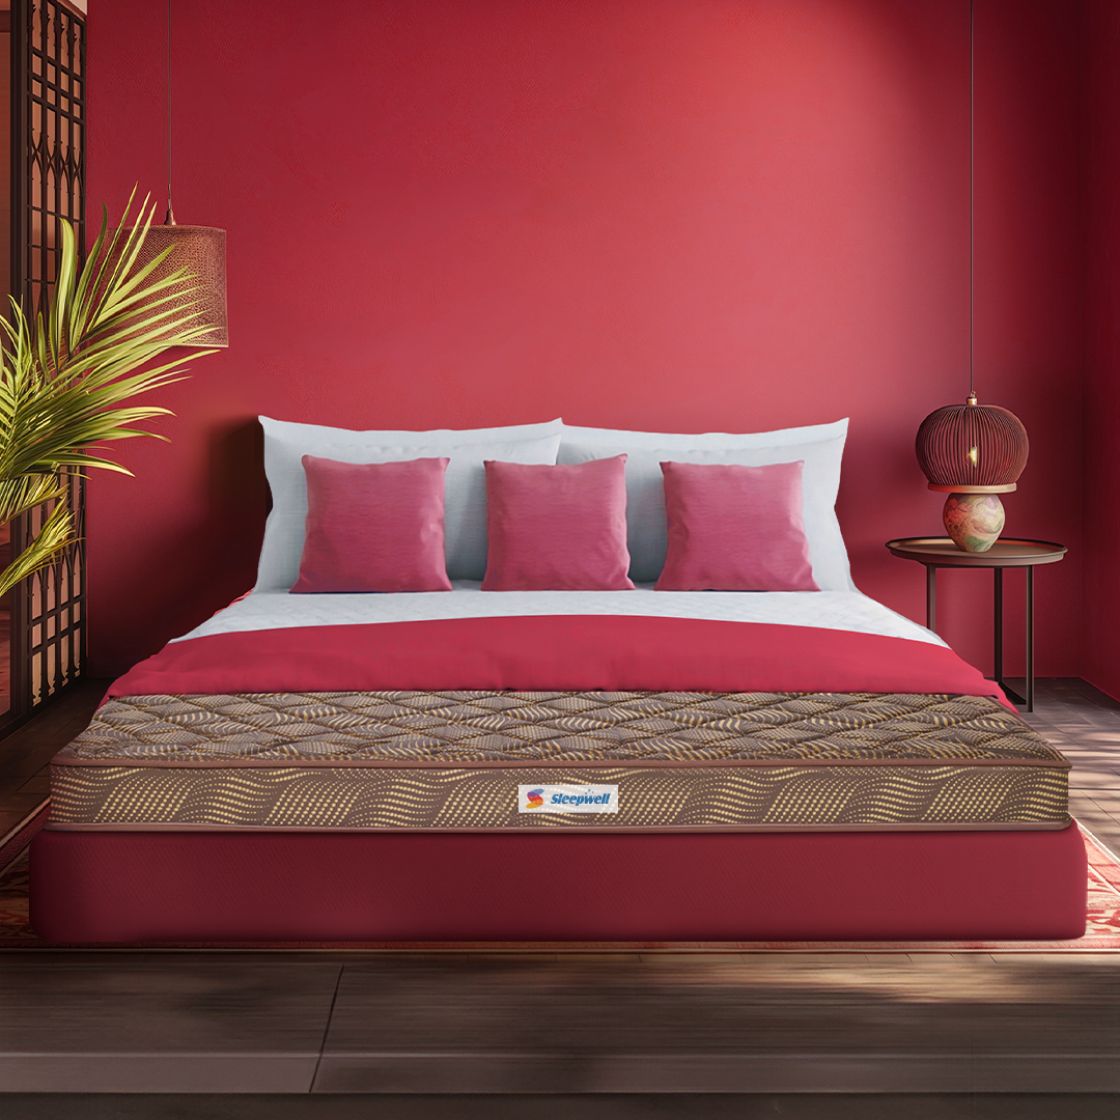 Sleepwell  Champ-Superior PU Foam | 5-inch Single Bed Size | Medium Firm | Anti Sag Tech Mattress (Brown, 78x48x5)